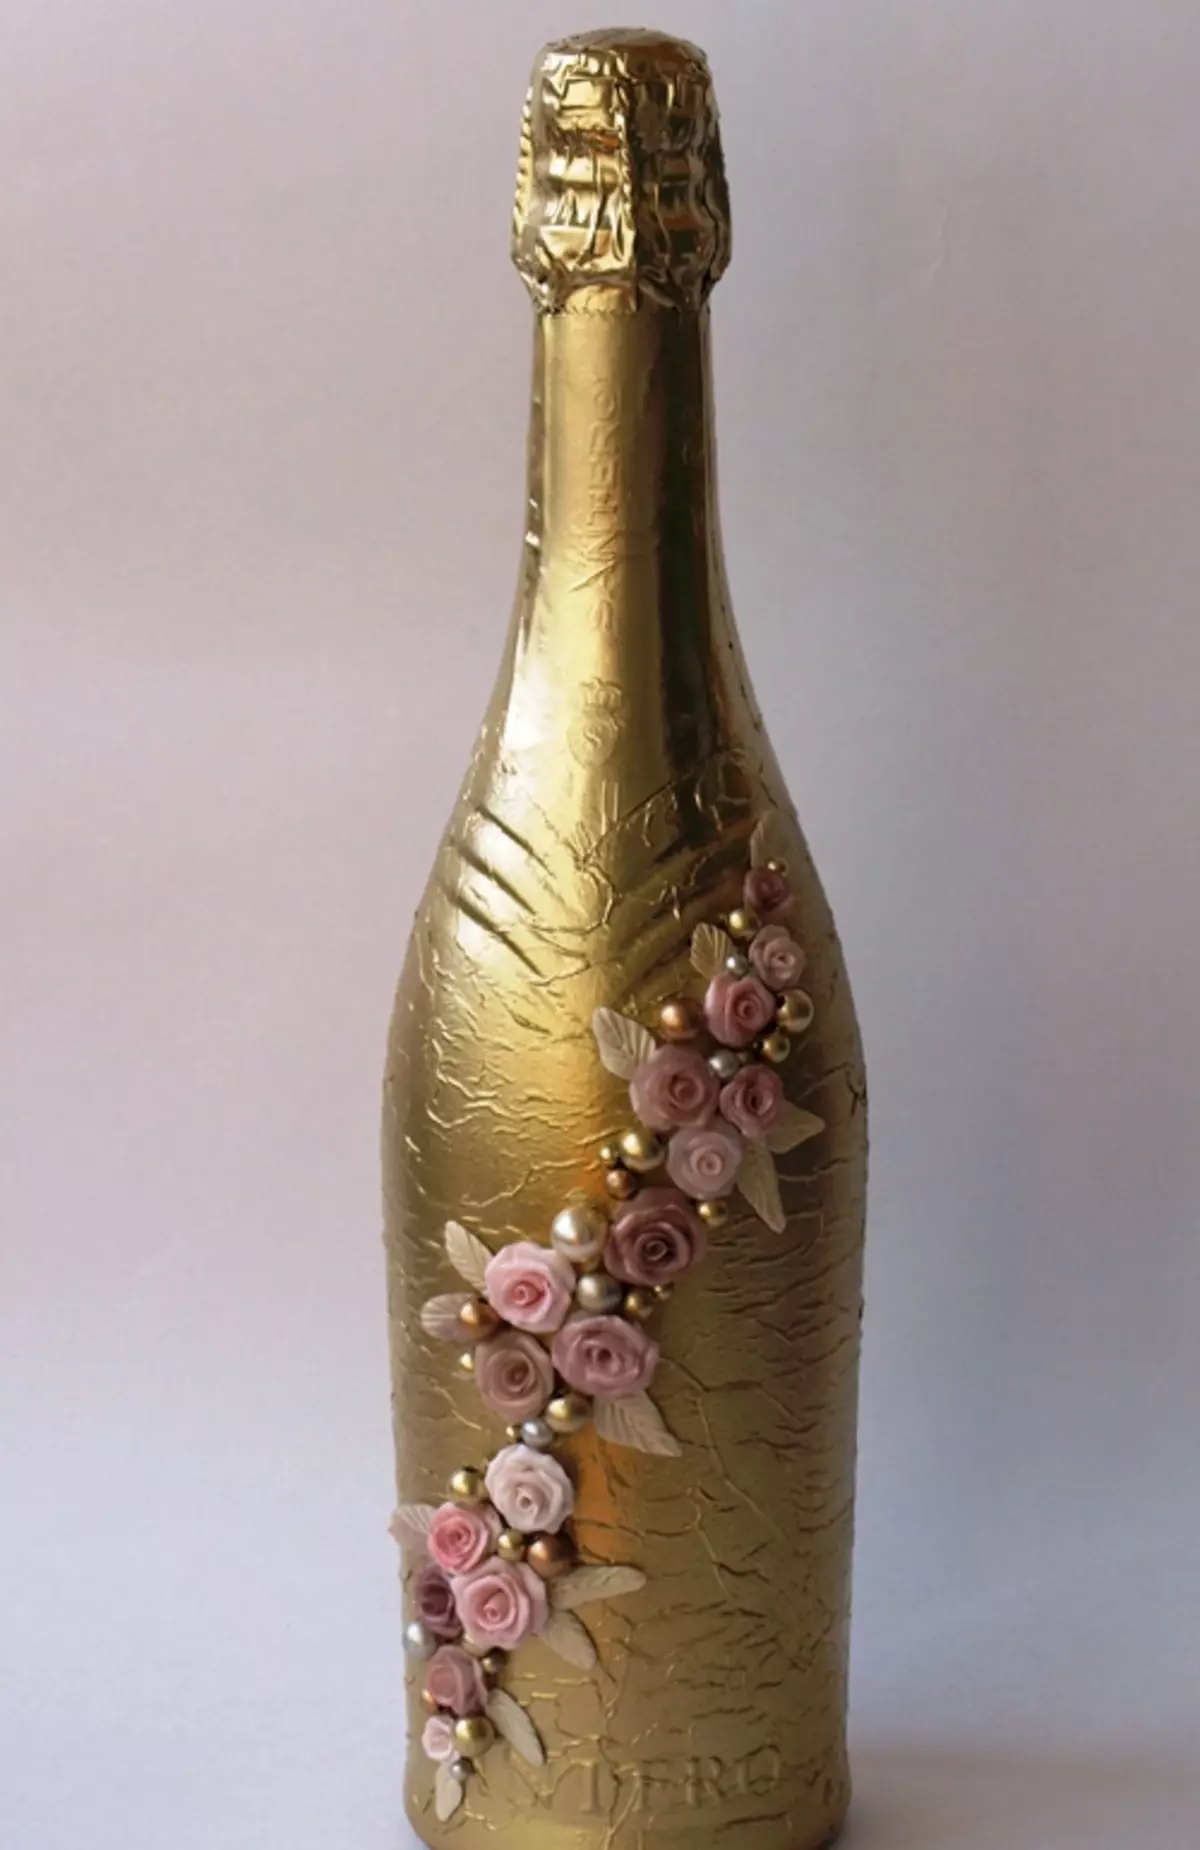 Decoupage of Champagne Bottle (42 Foto): Idea pada 8 Mac dan pada hari lahir wanita, kelas induk di Decoupage dengan tangan mereka sendiri 19090_36